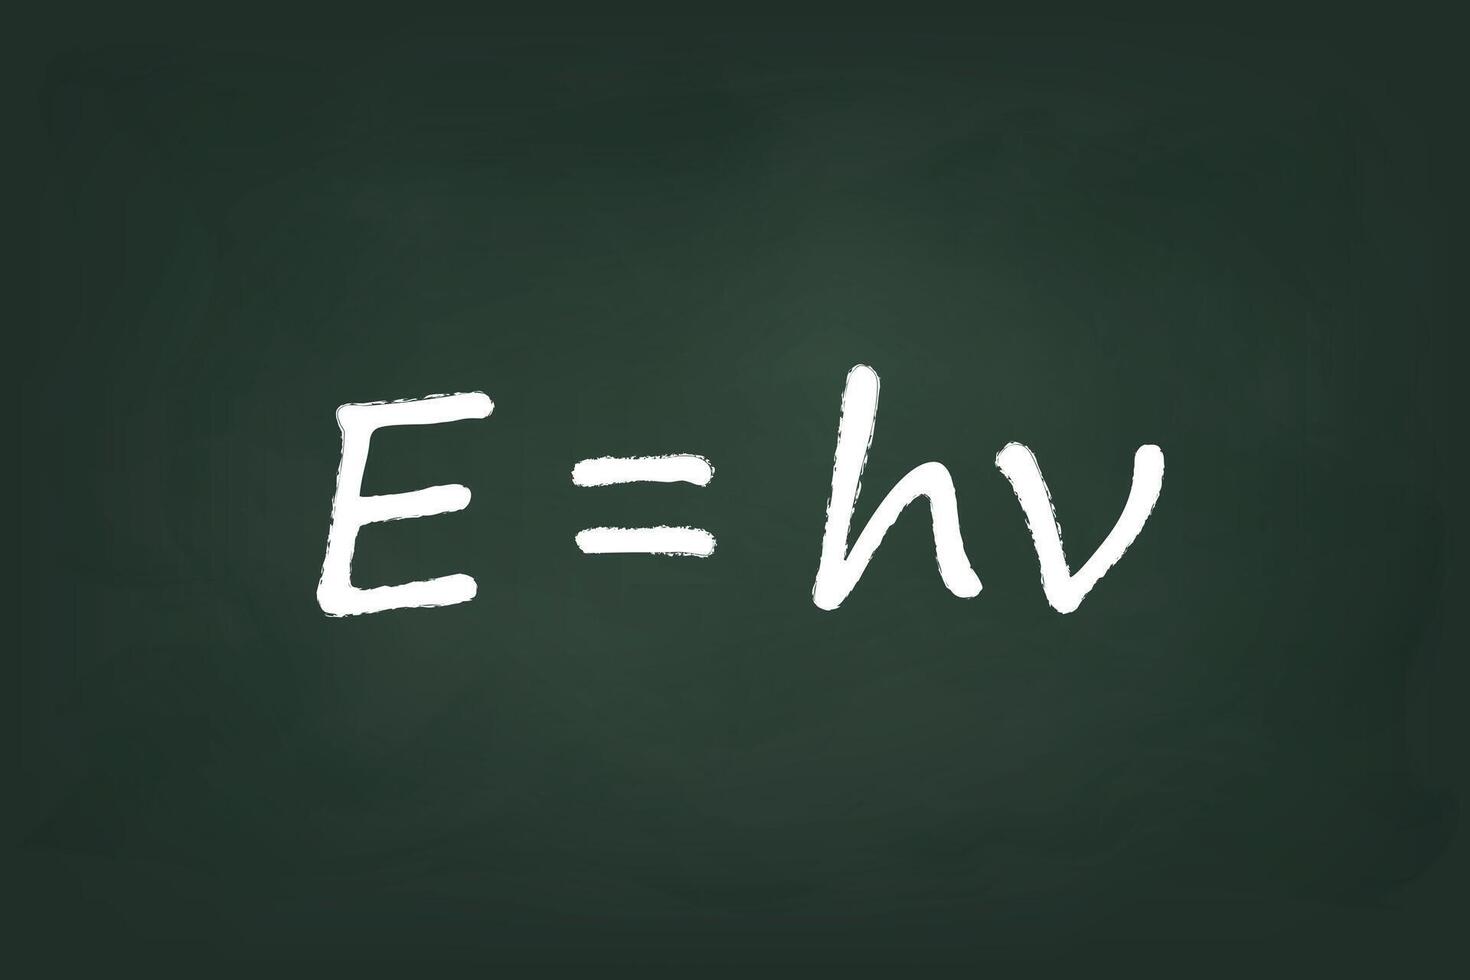 Planck's Equation on Chalkboard blackboard vector